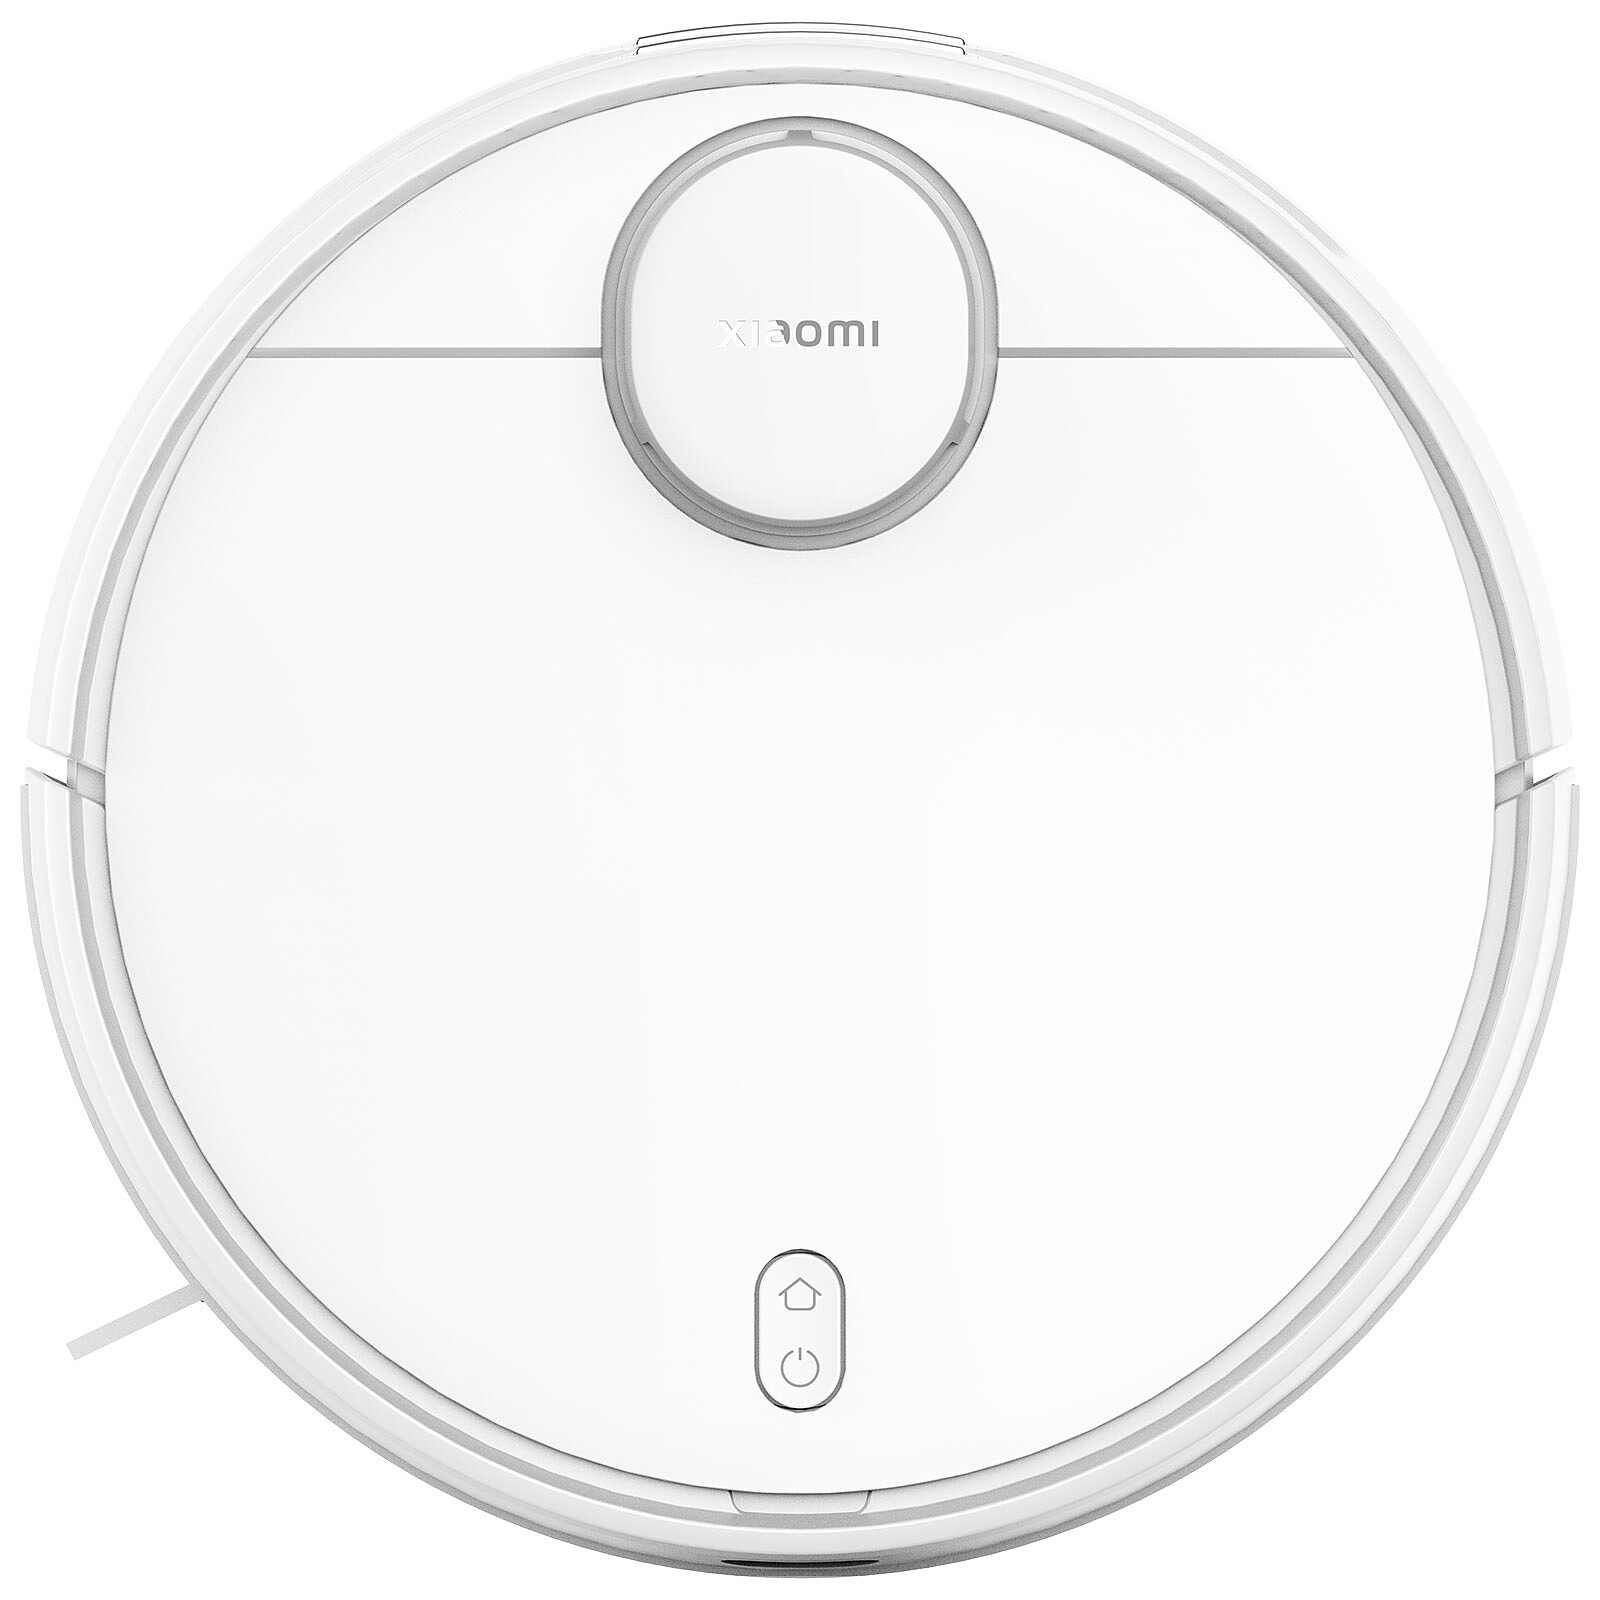 Xiaomi Mi Vacuum S12 - Robot and vacuum cleaner - LDLC 3-year warranty